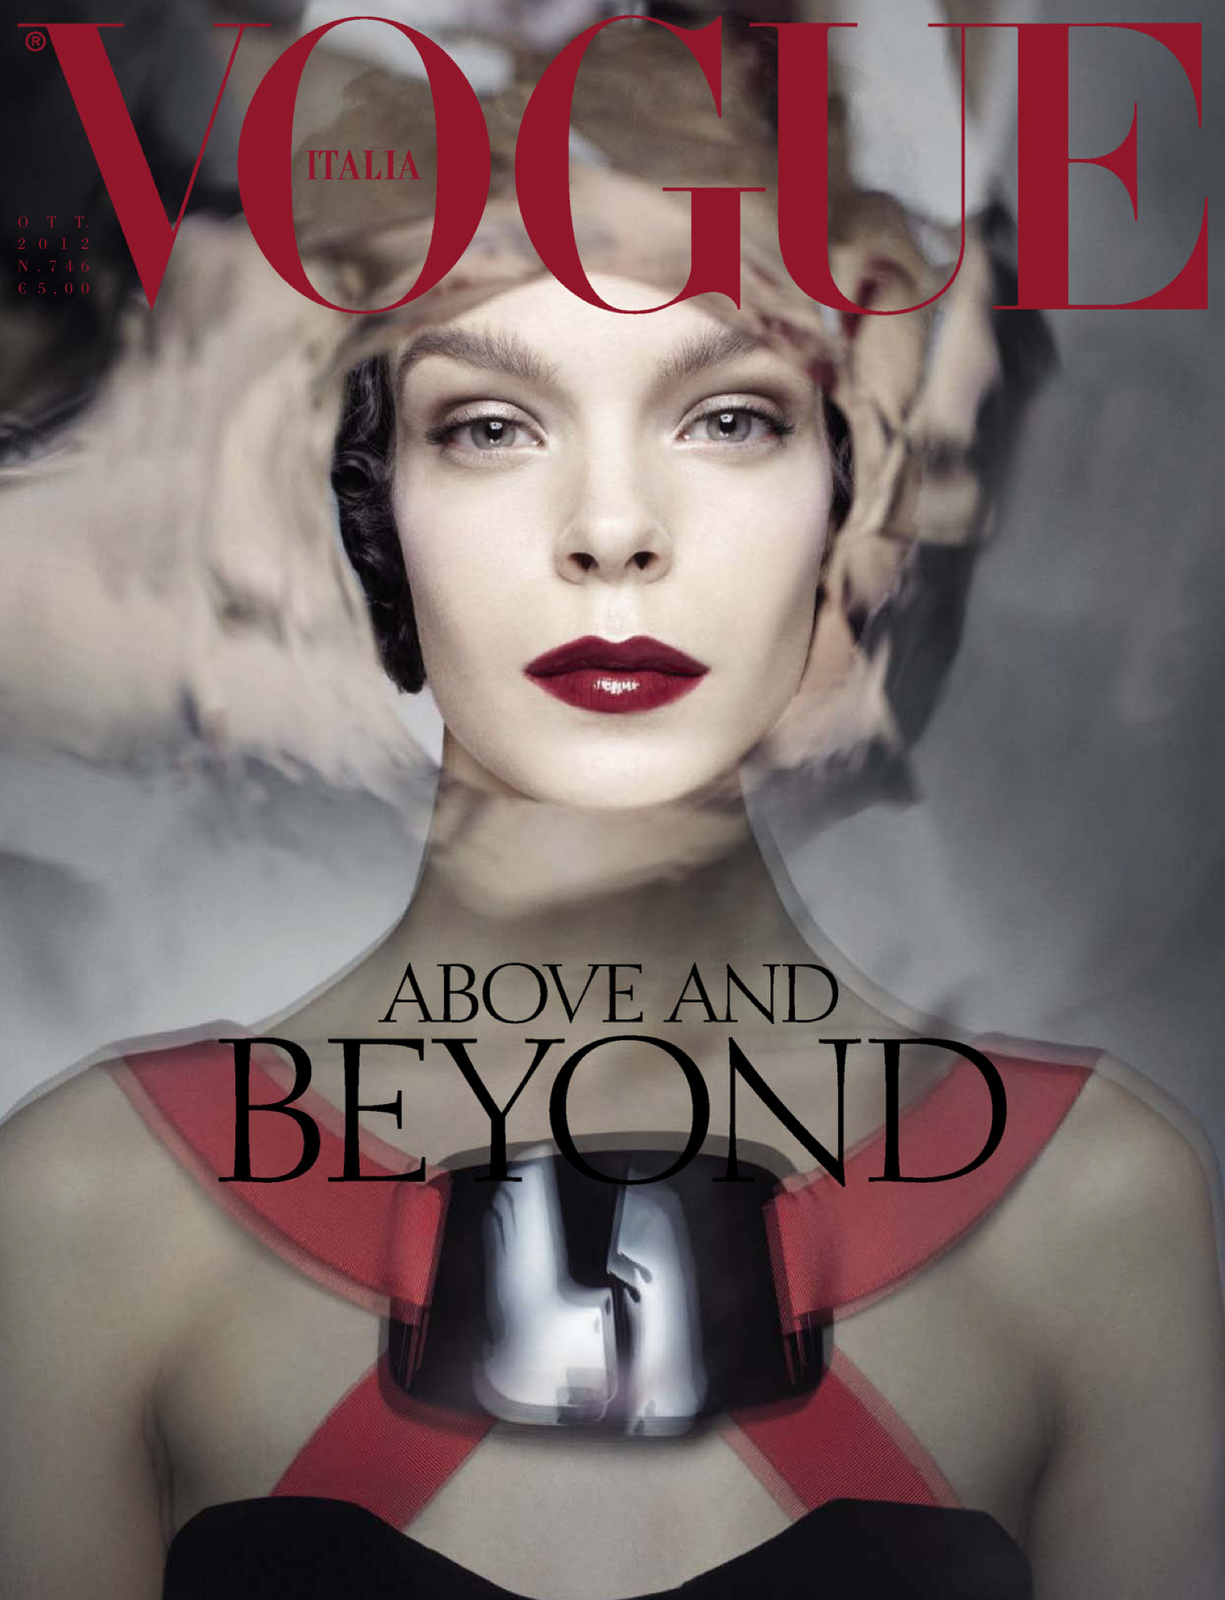 Vogue's Covers: Steven Meisel